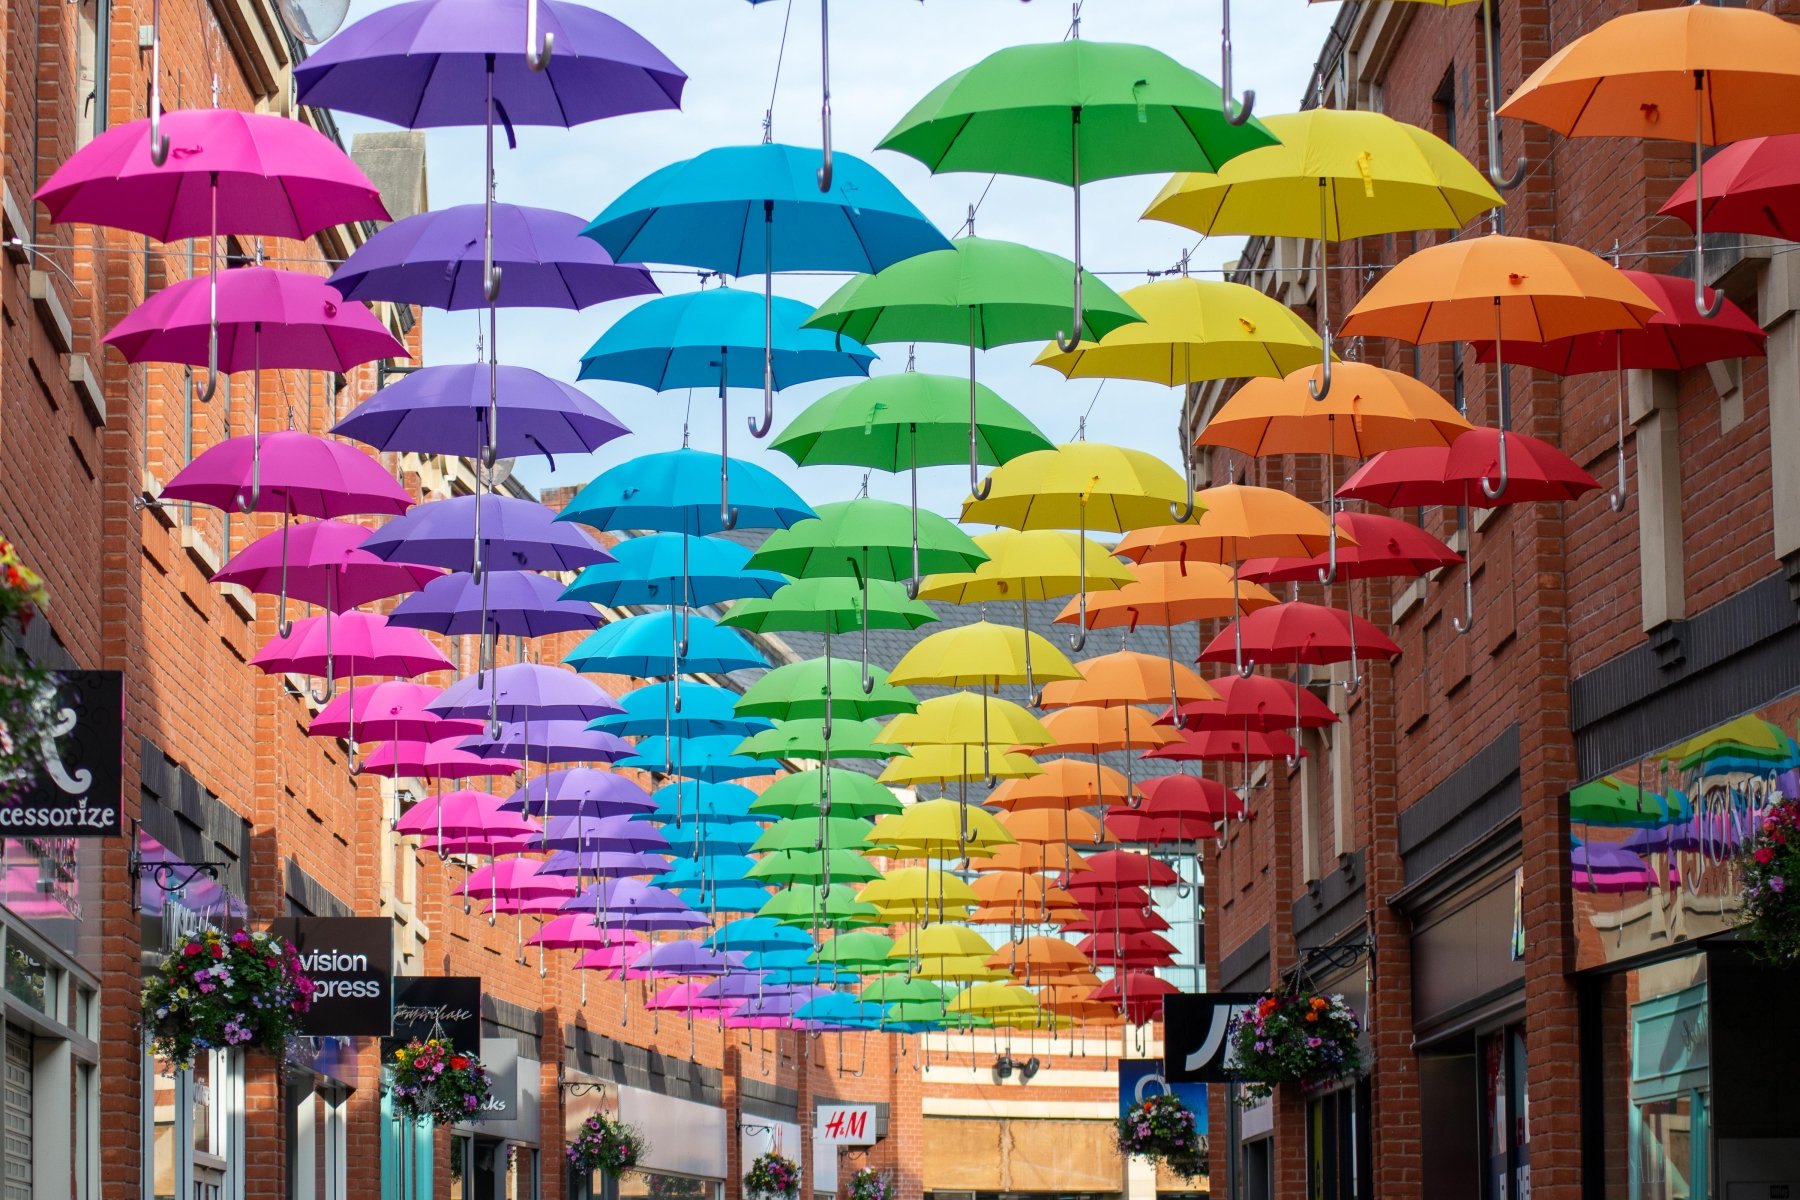 Umbrellas by Karl Gandy